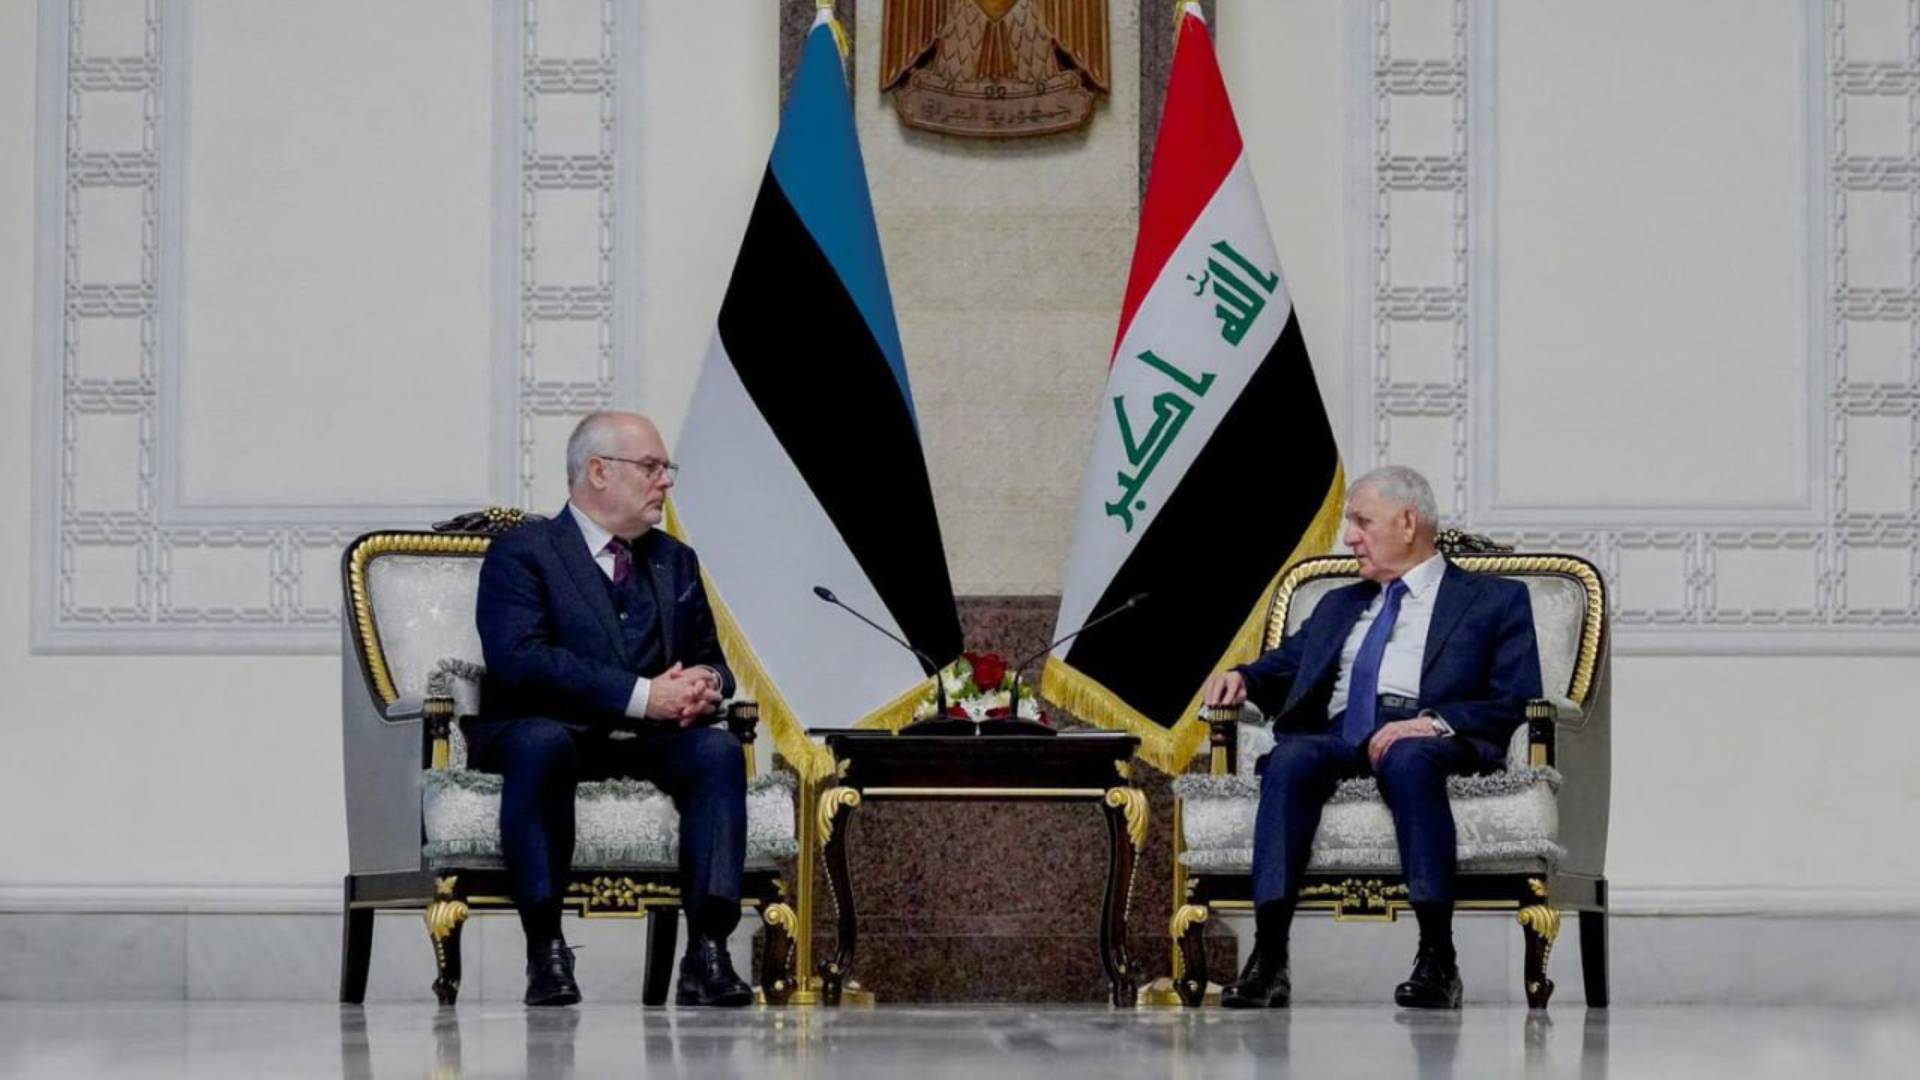  Presidents of Iraq and Estonia 